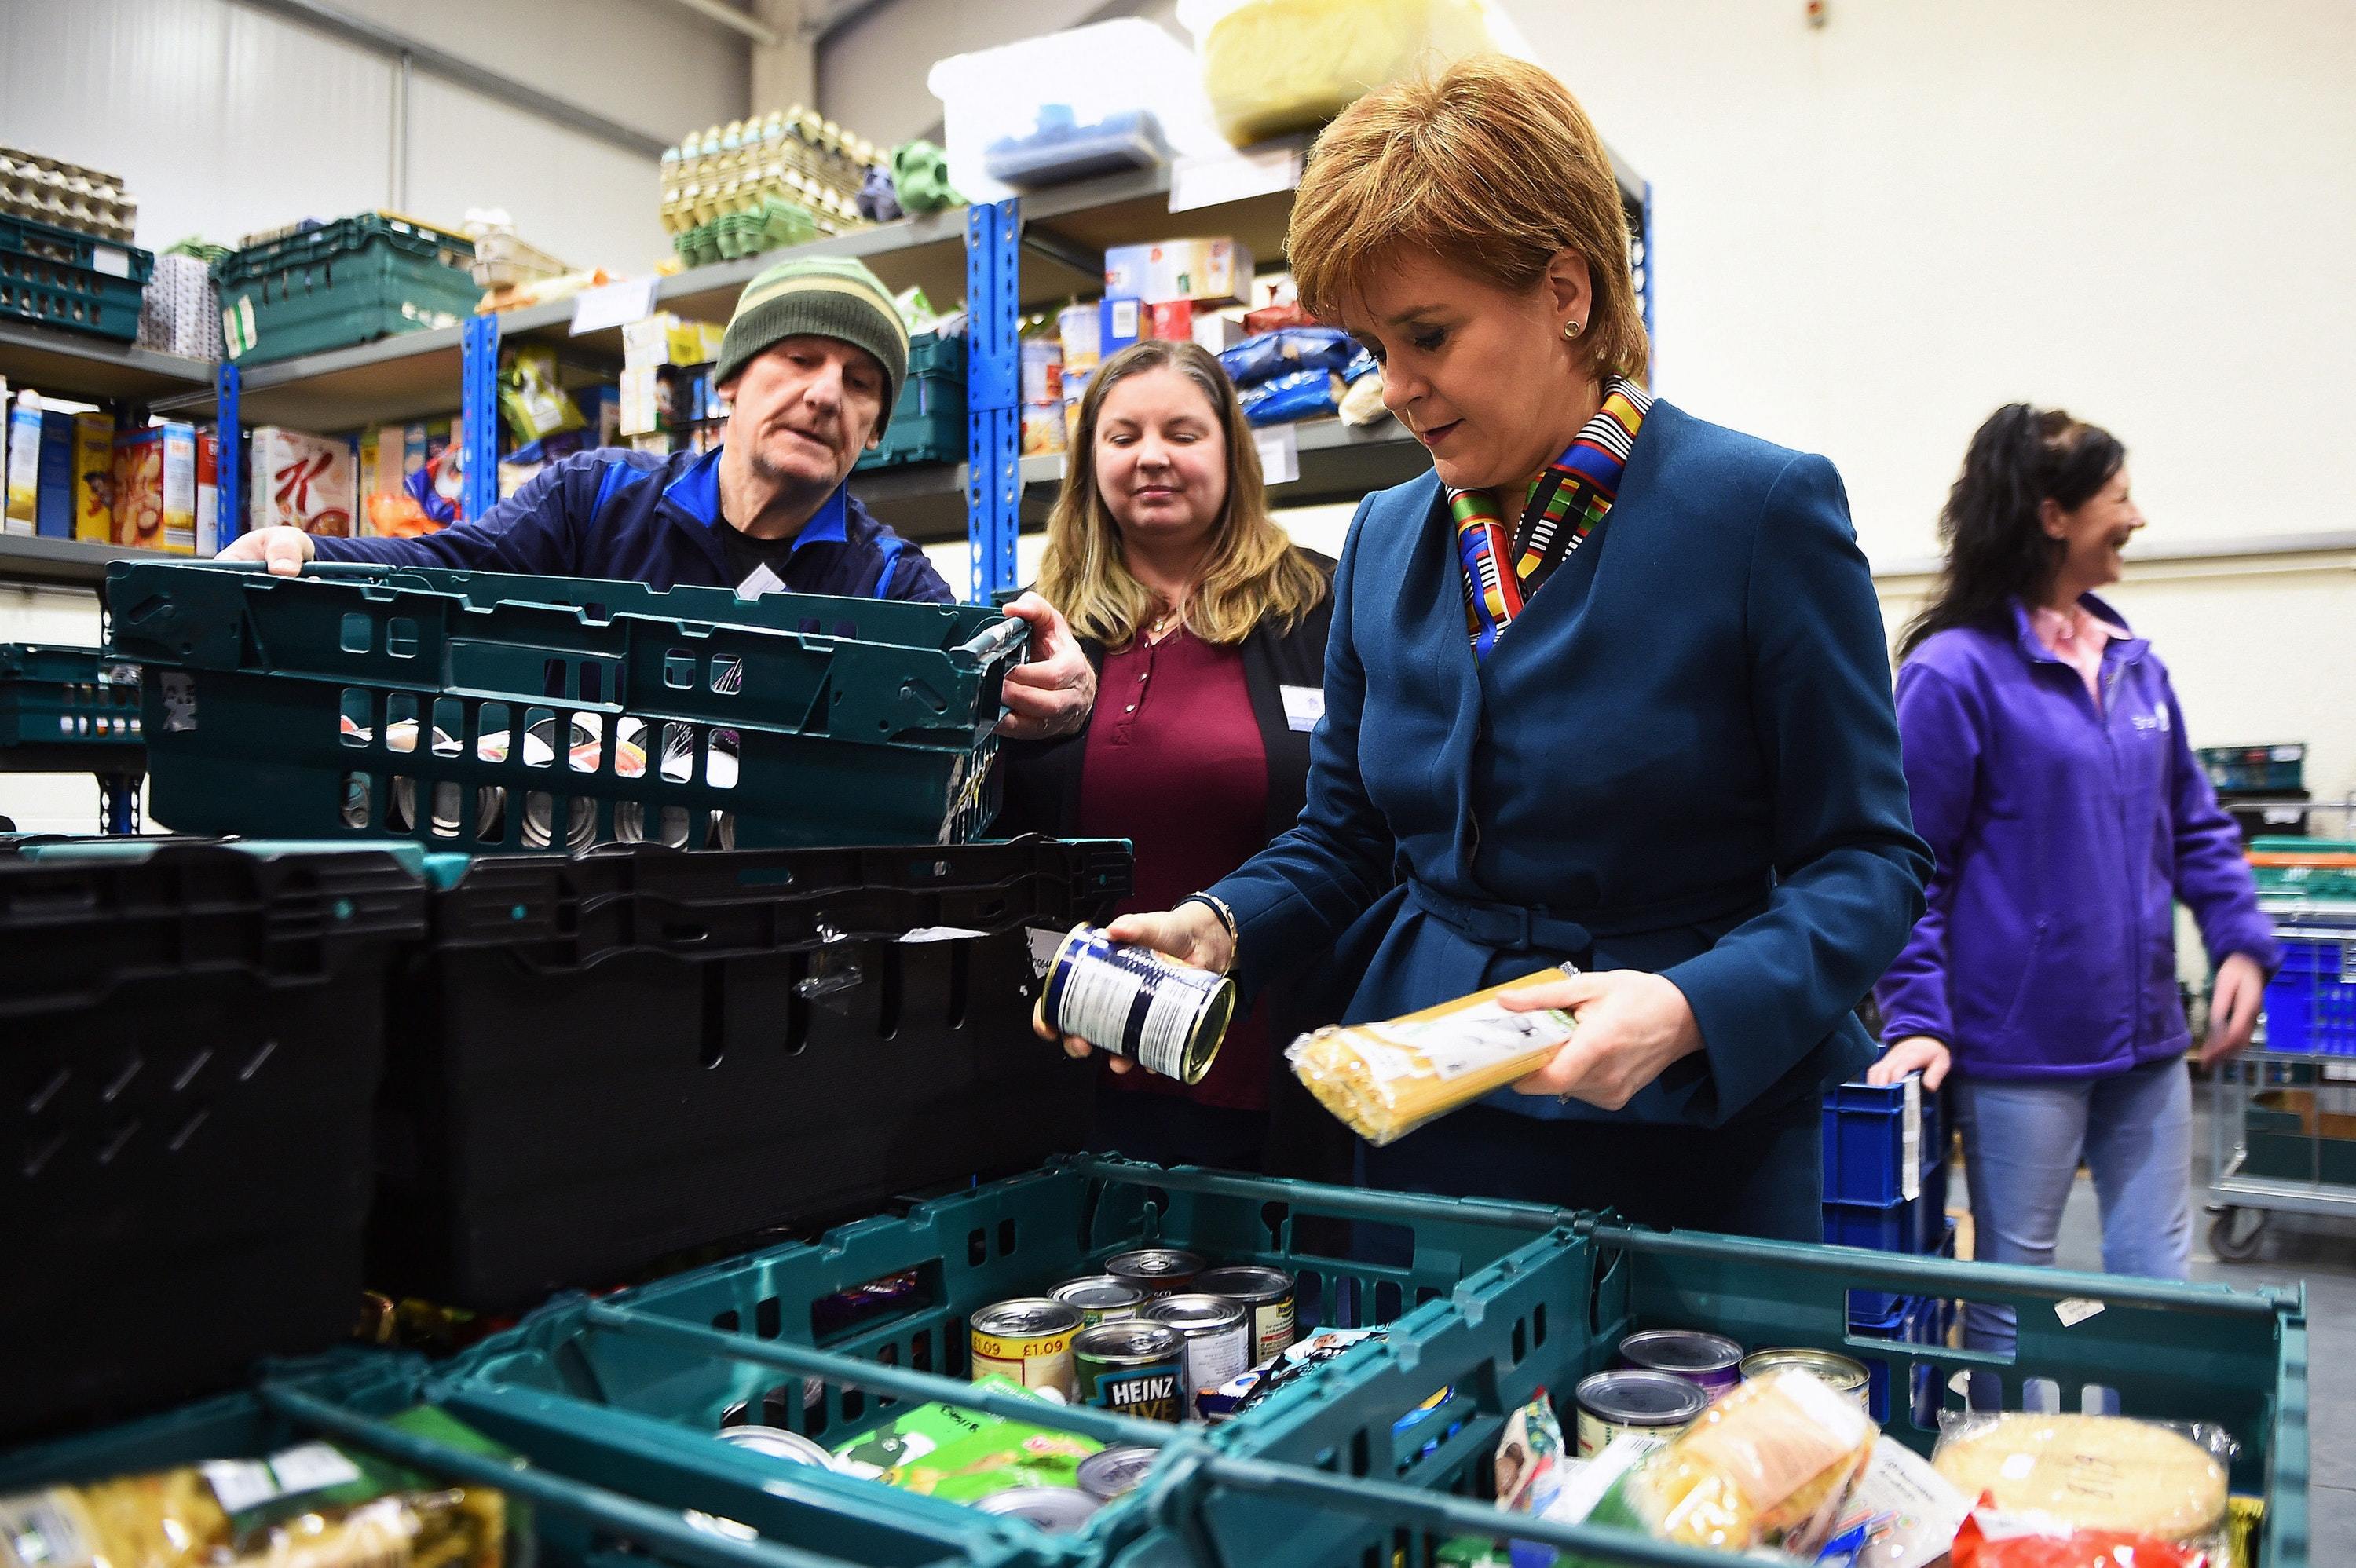 Scotland’s First Minister Nicola Sturgeon visits food bank (Andy Buchanan/PA)